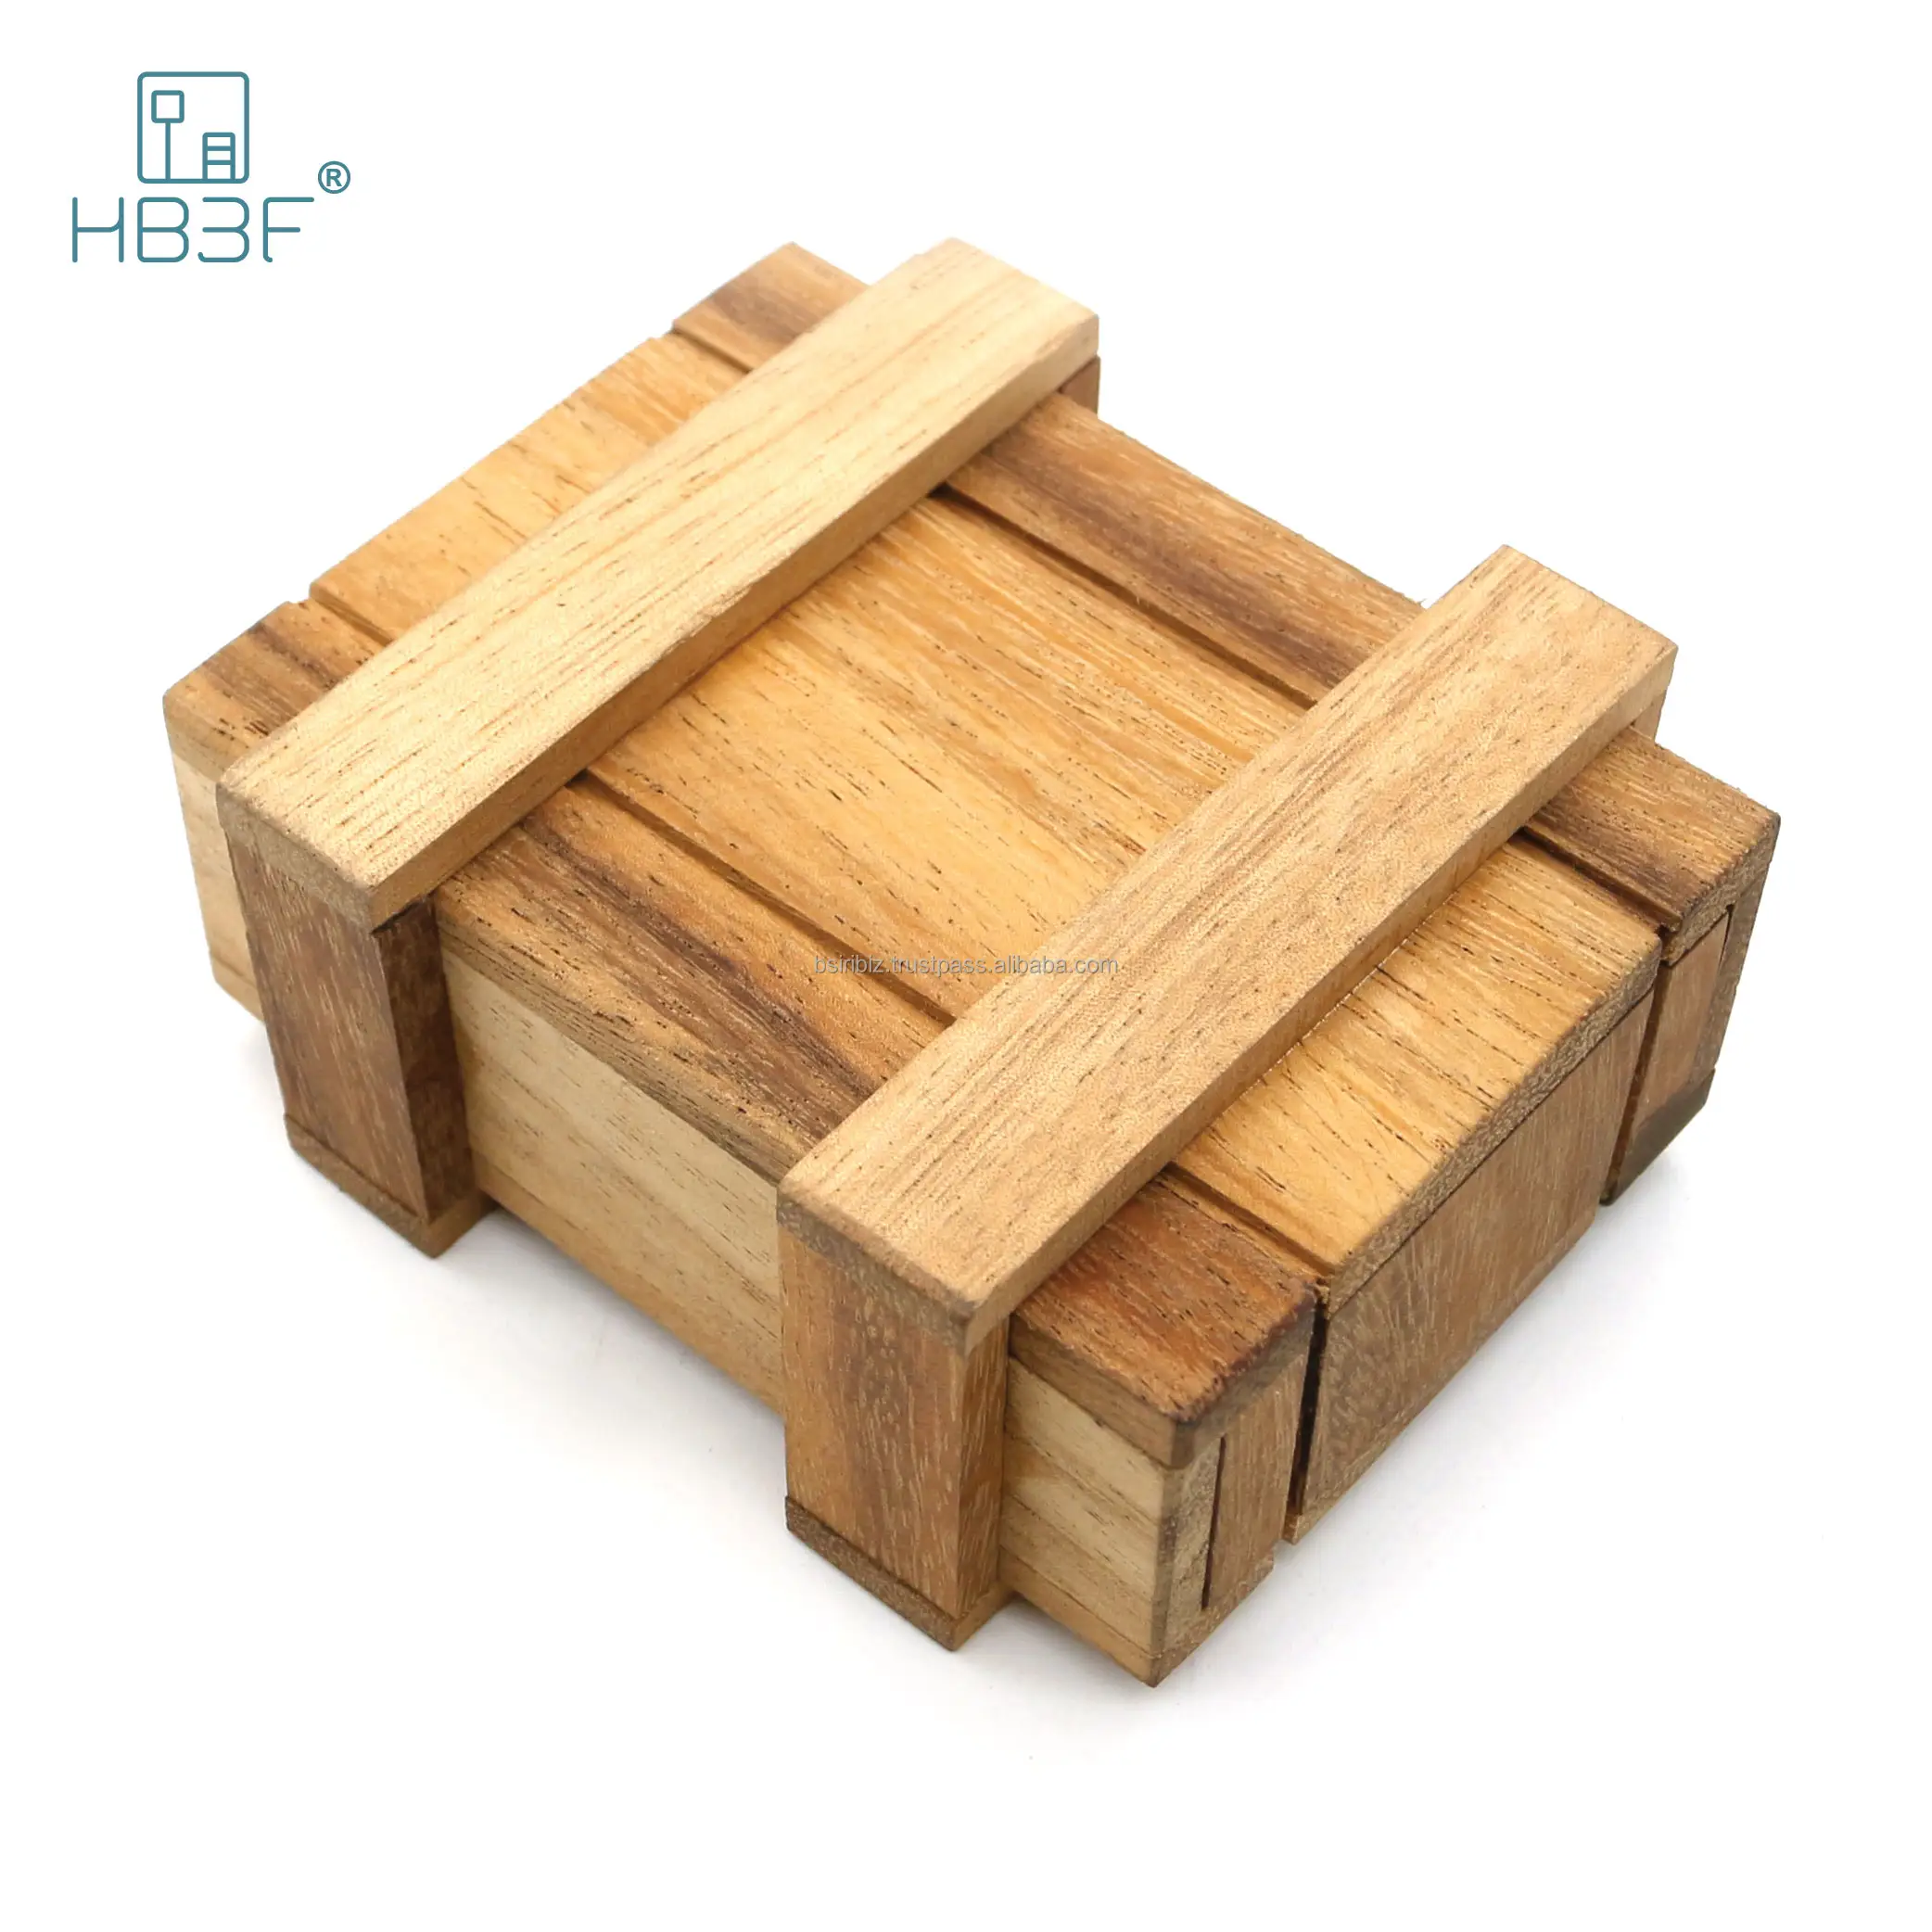 Magic Box Puzzle Wooden Hidden Secret Compartment Kids Toys Games Brain Teaser Game Wood Treasure Unique Gifts for Adult 3D